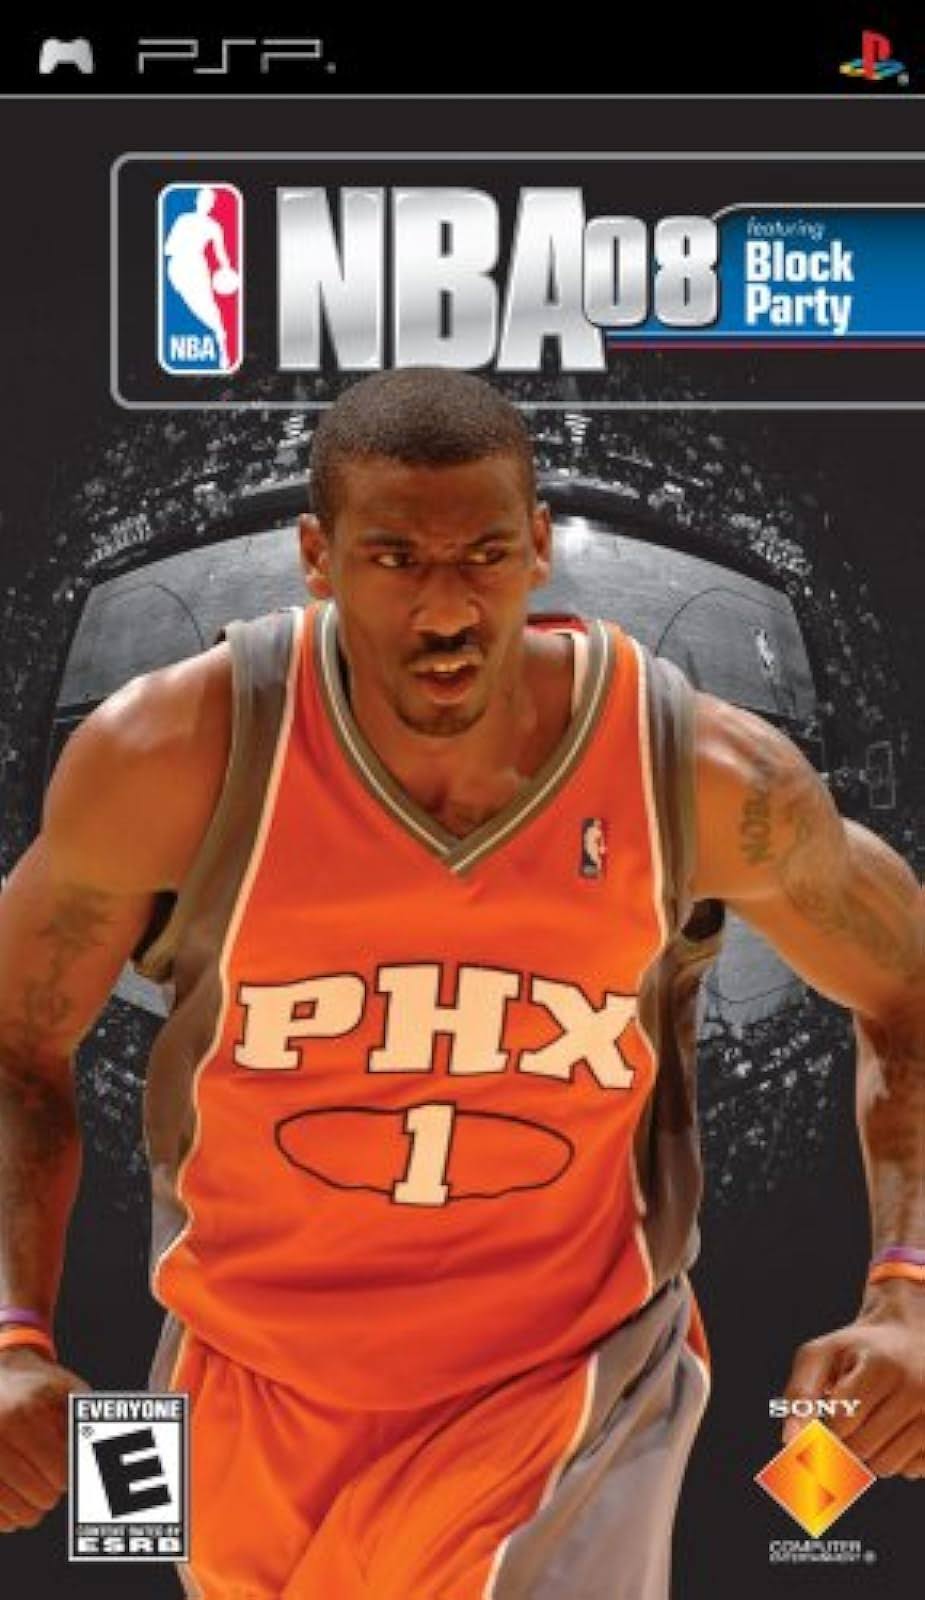 NBA 08 Block Party - Sony PSP